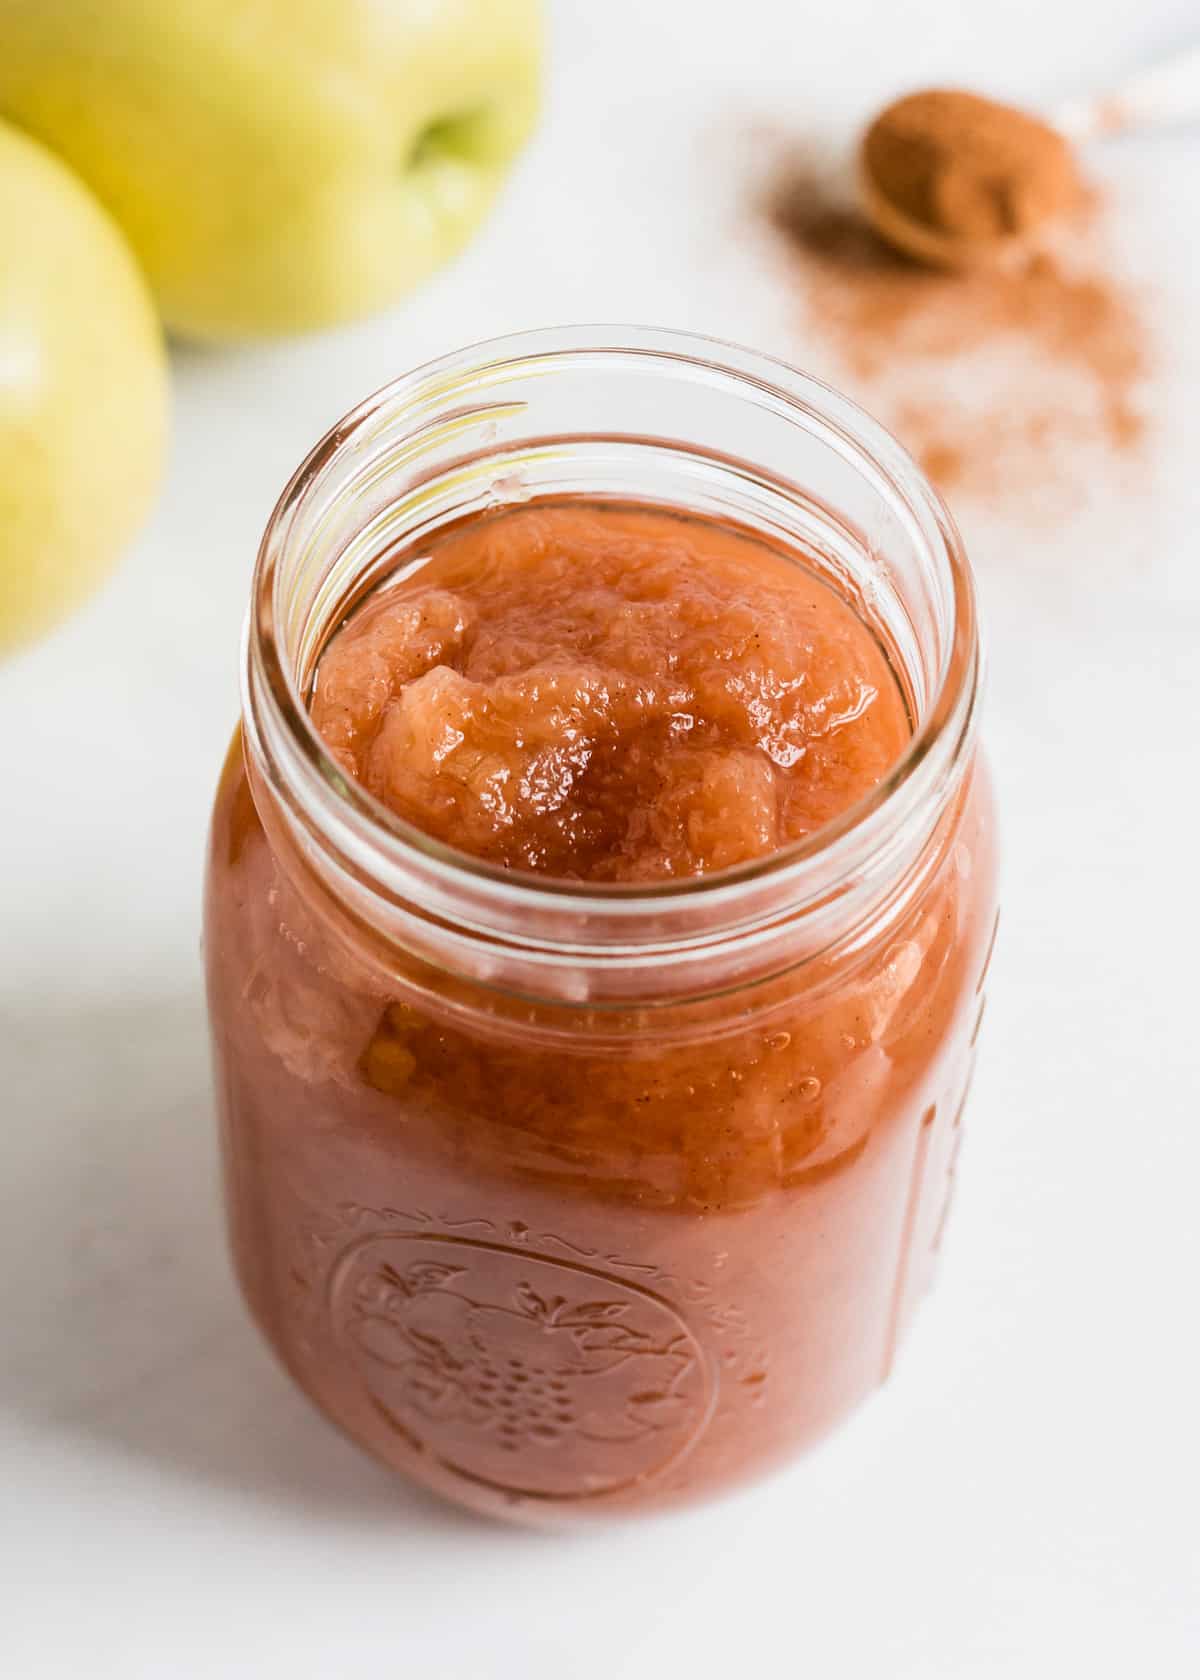 Applesauce in a jar.